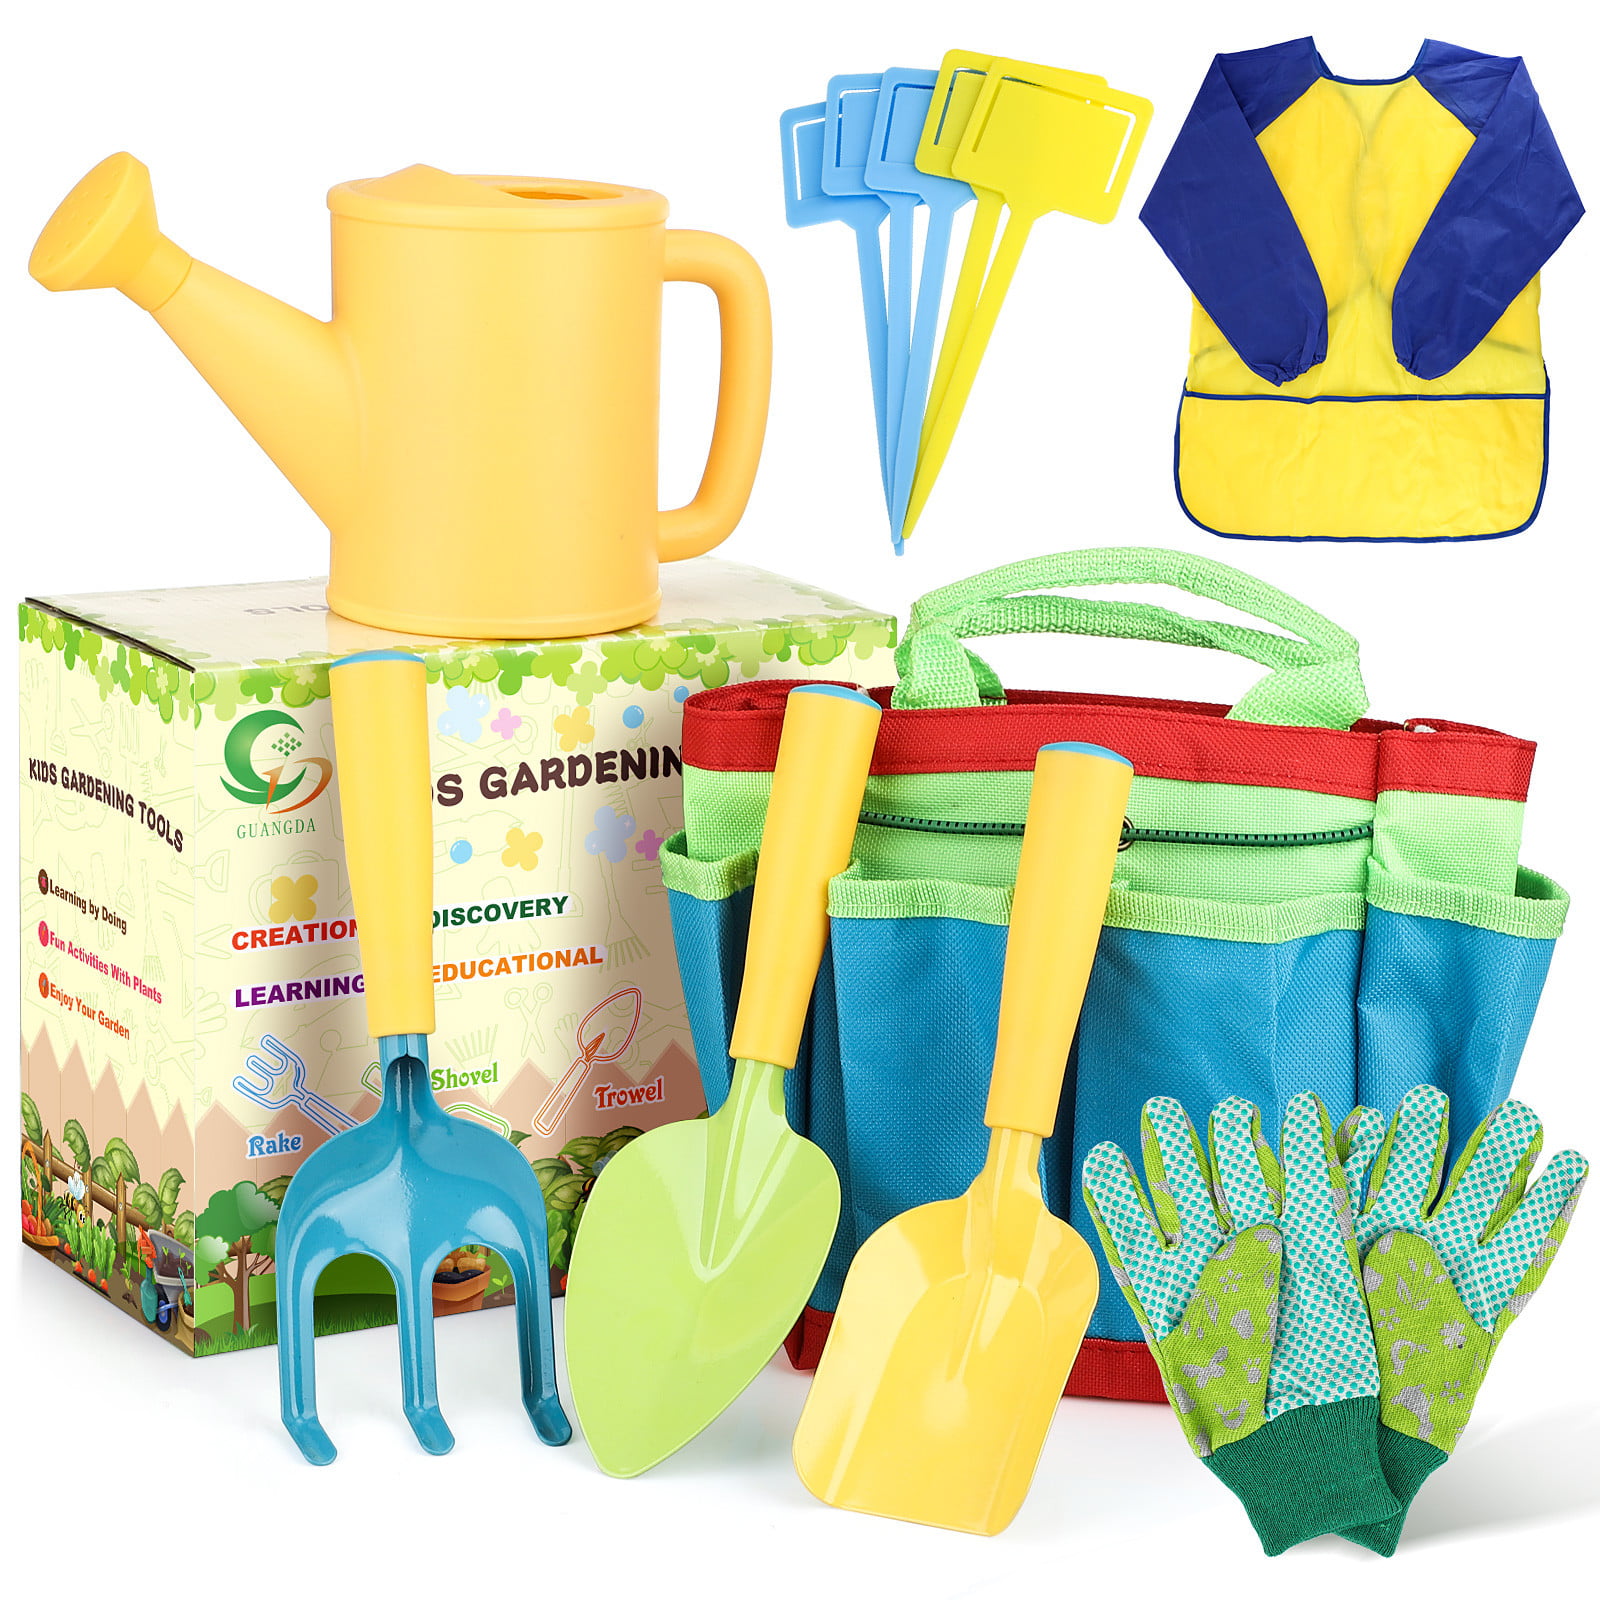 Jellydog Toy Kids Gardening Tools Set,8 Piece Garden Tool Set,Includes Watering Can Shovel Rake Trowel,Hat and Kids Apron Smock,All in One Gardening Kit Gardening Gloves 